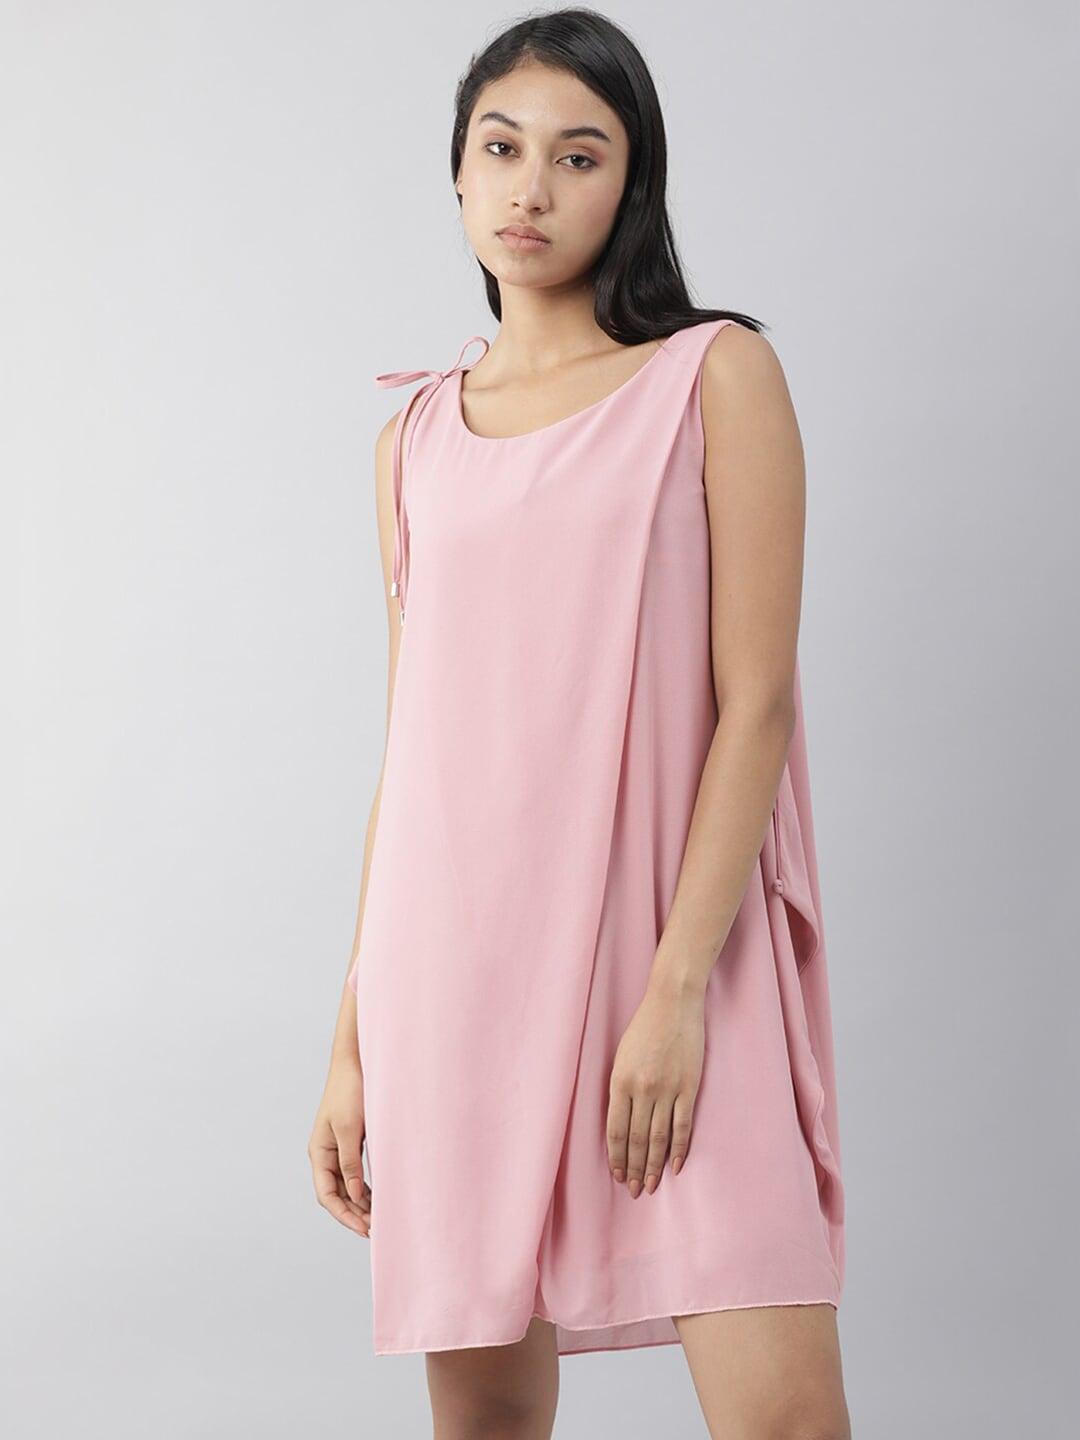 rareism-pink-a-line-dress